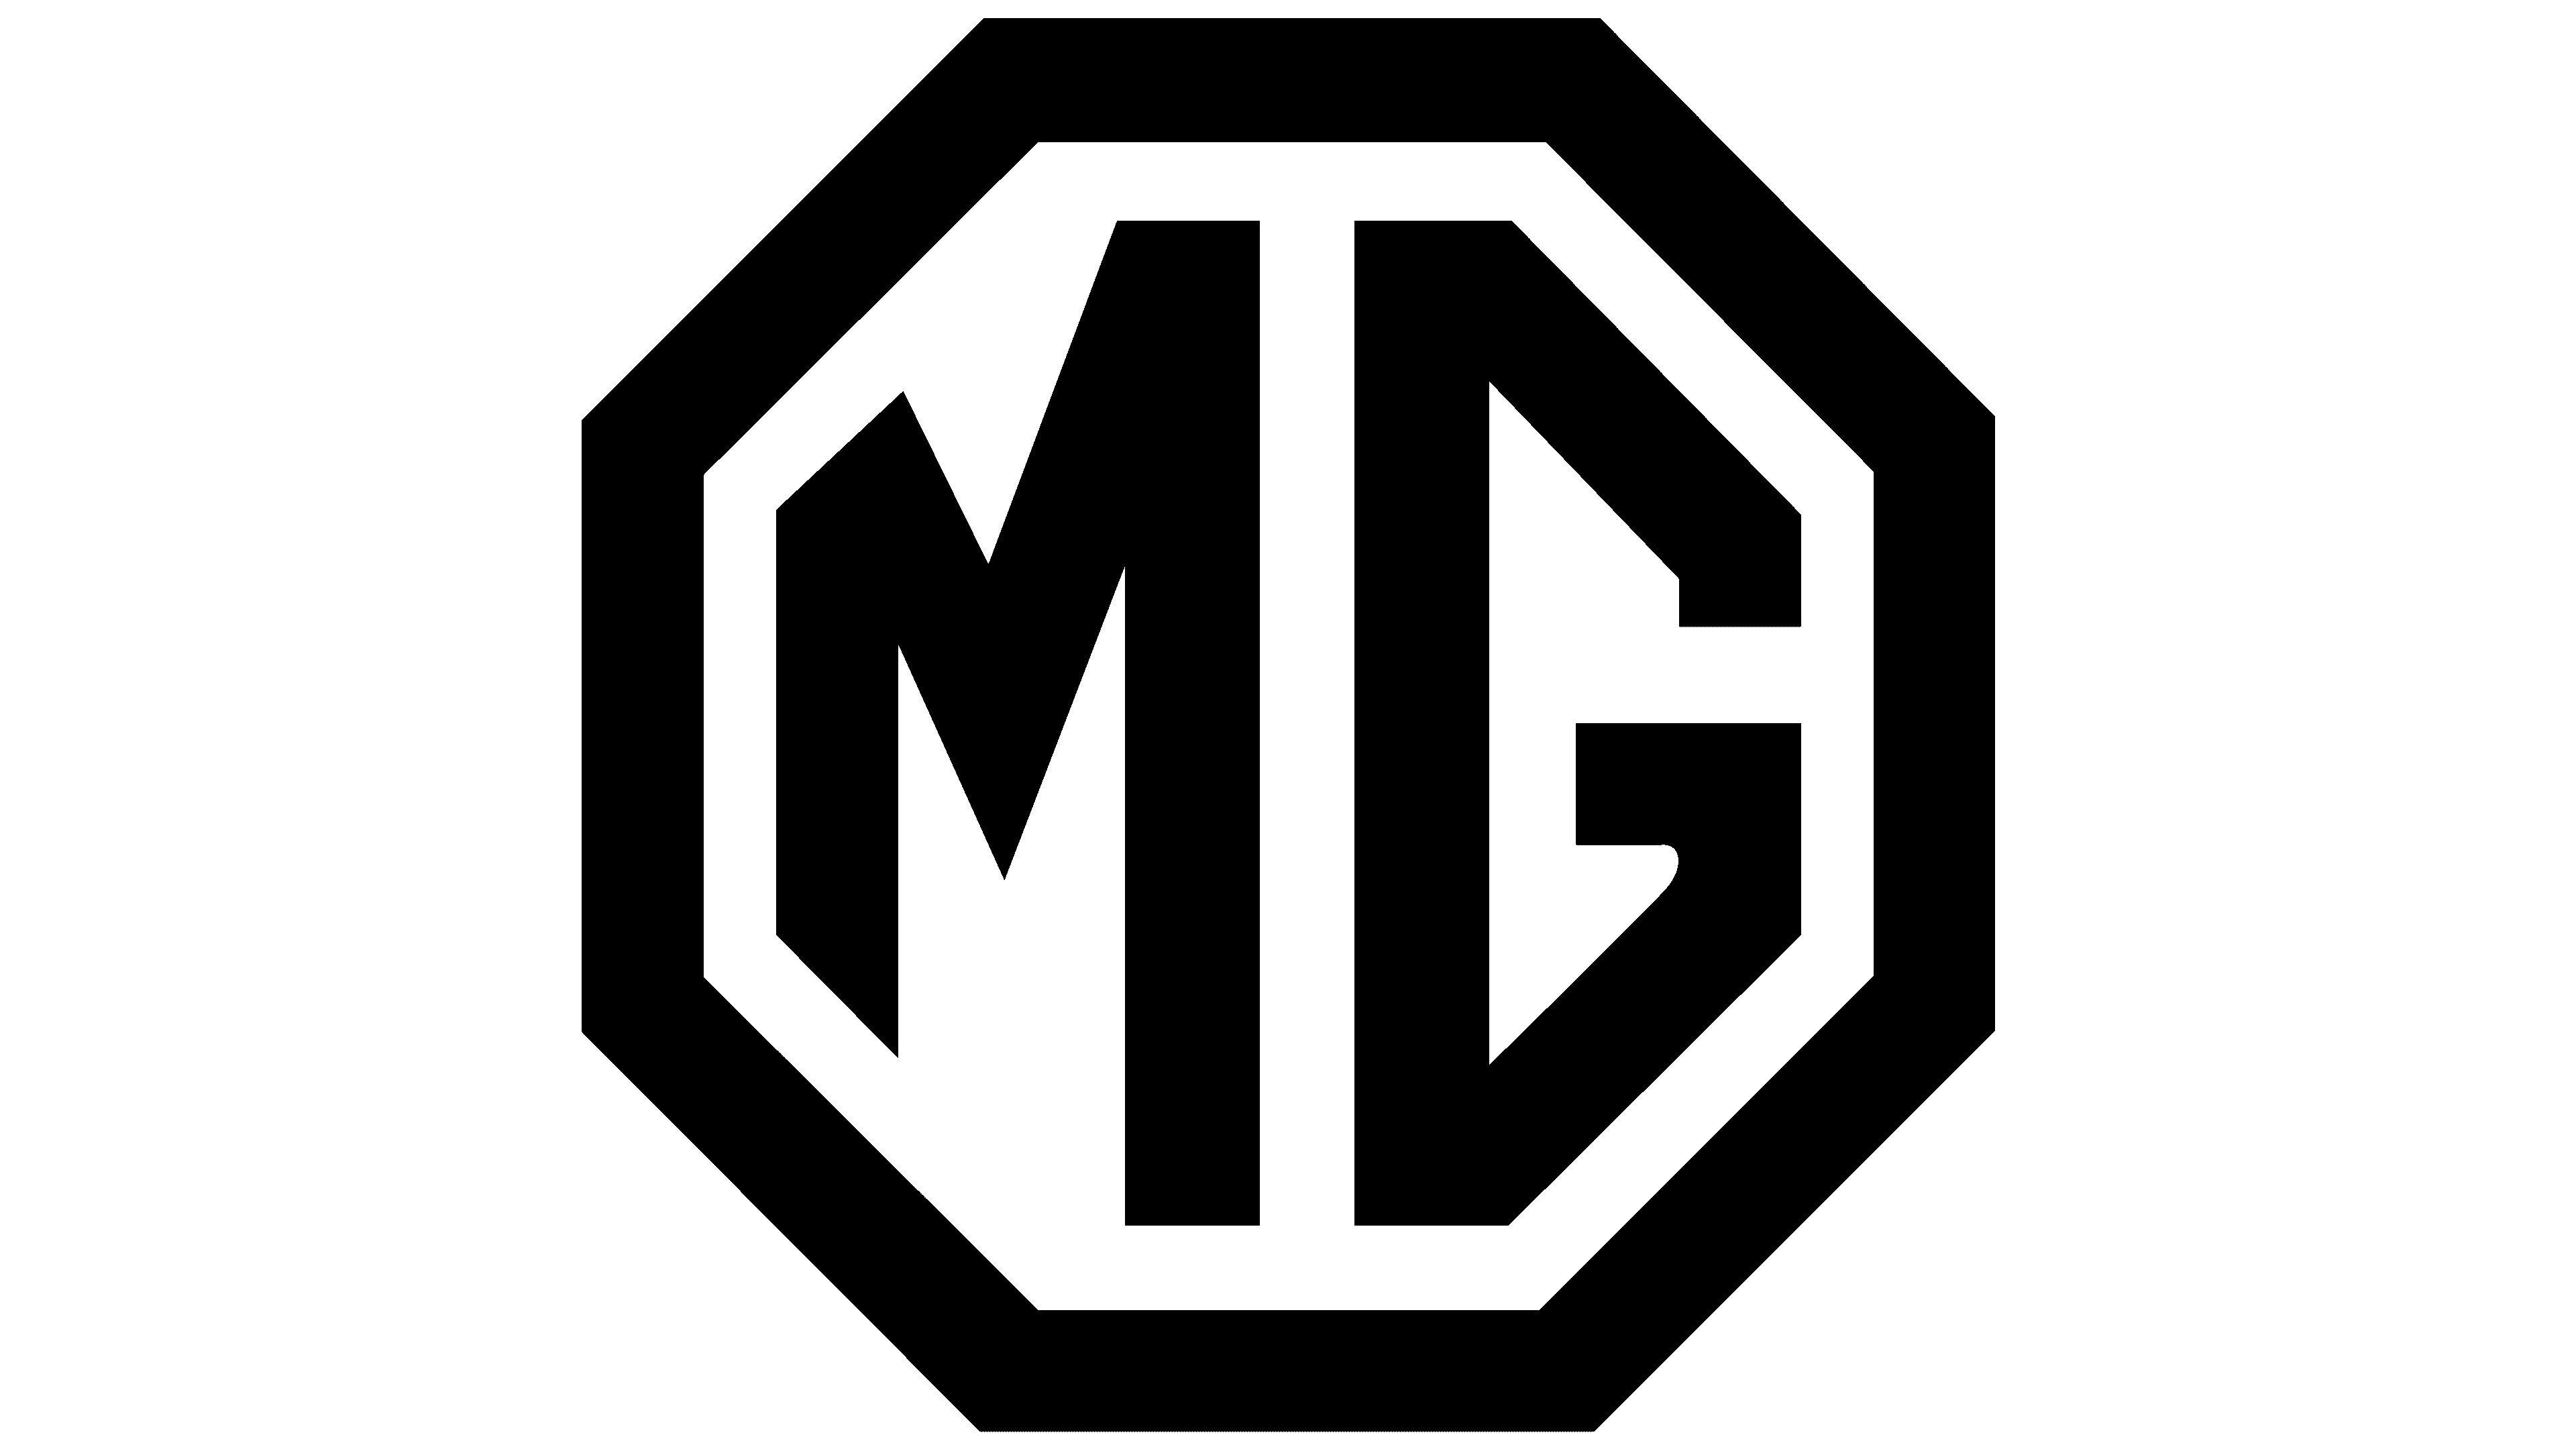 Moët & Chandon Logo , symbol, meaning, history, PNG, brand